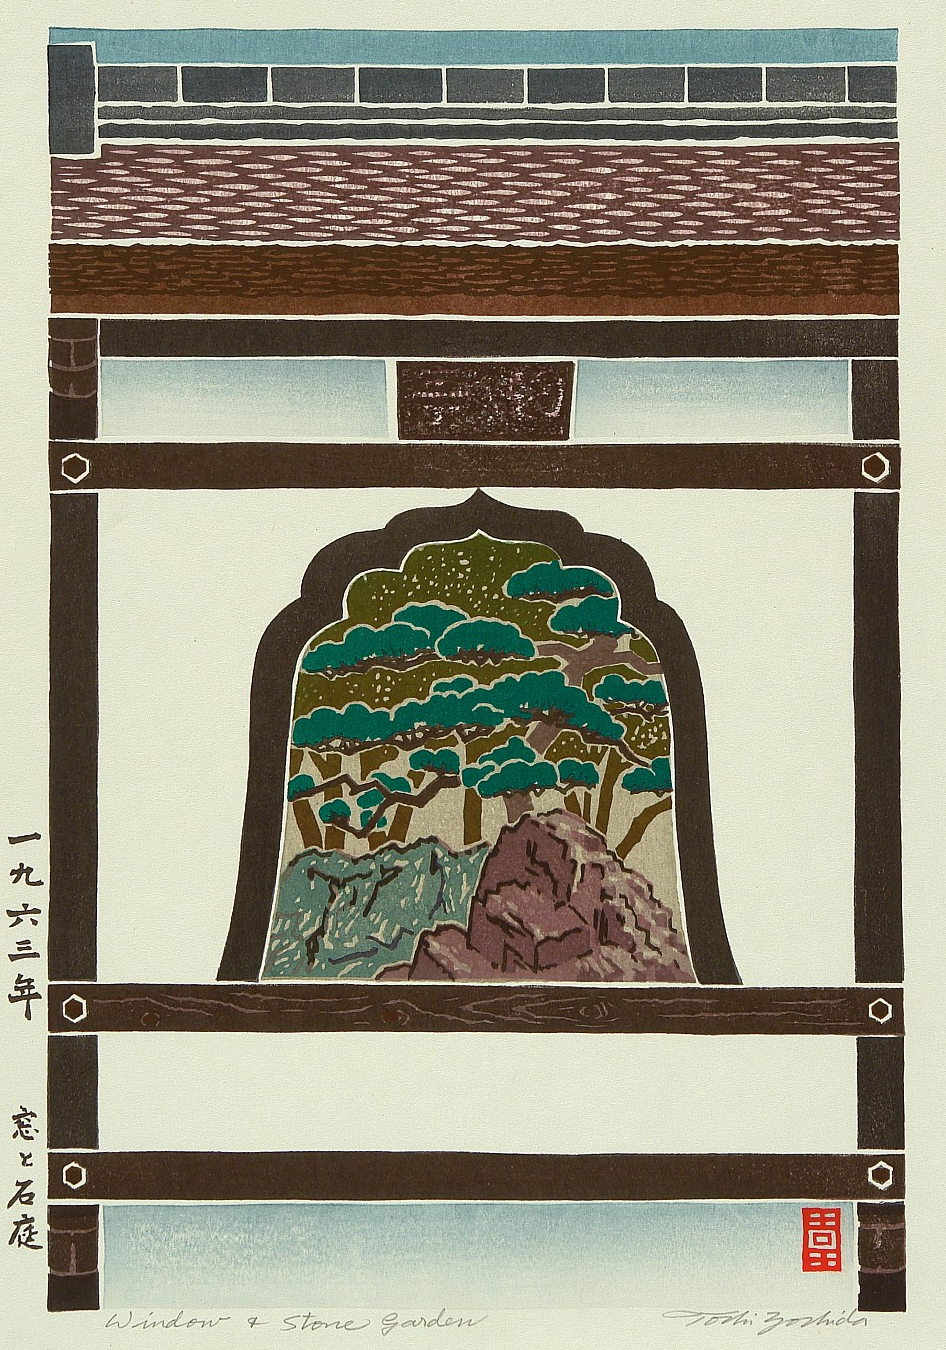 Window and Stone Garden woodblock print